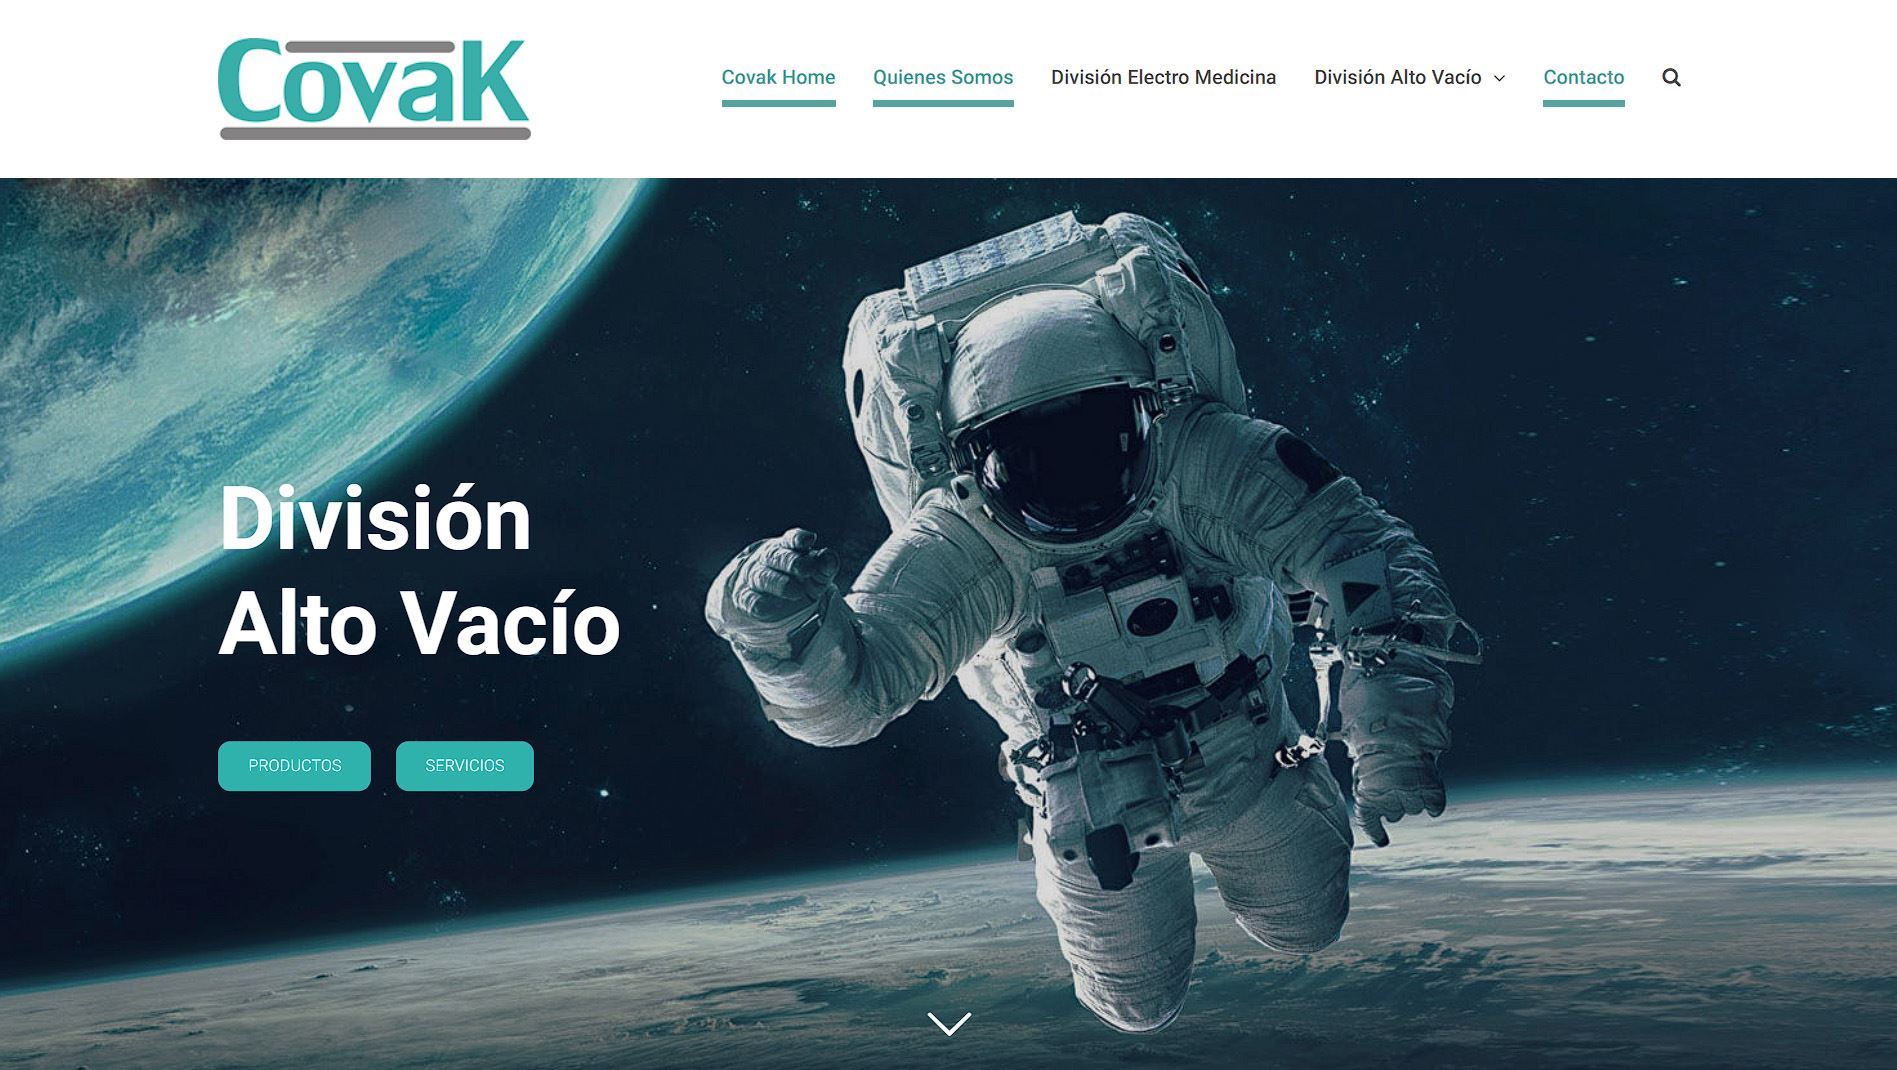 Alacasa Web Design - Covak